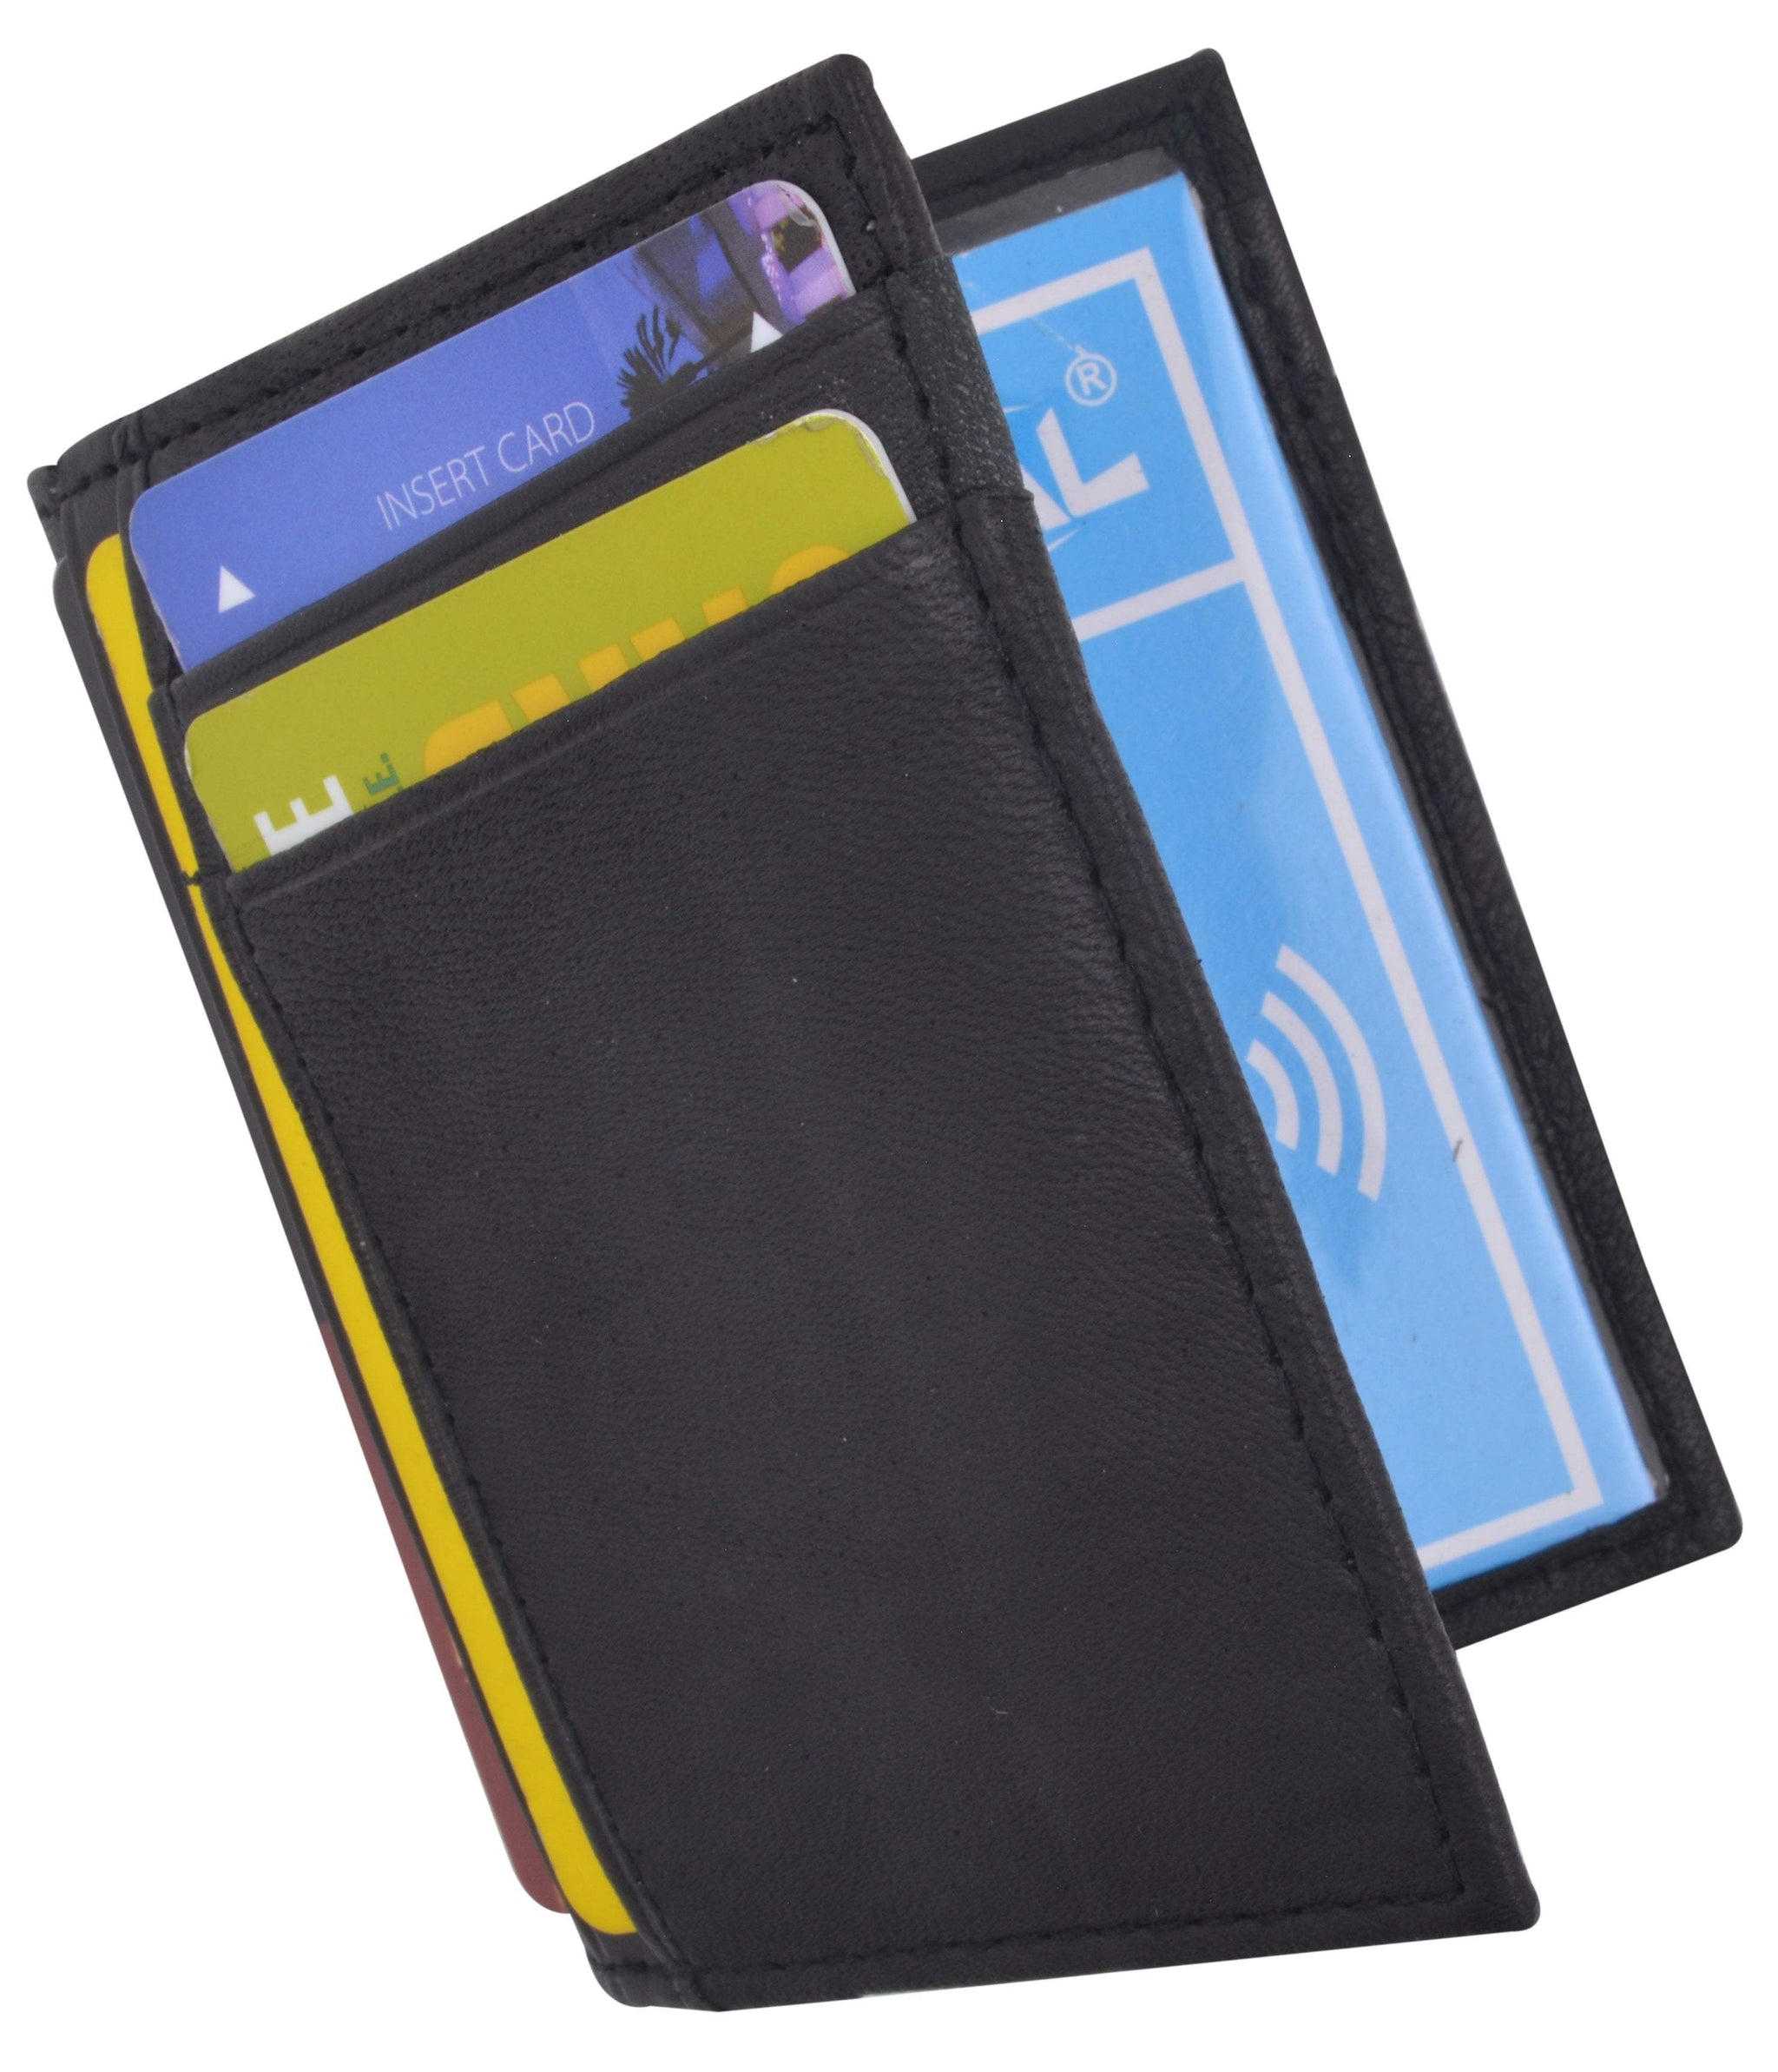 Slim Minimalist Wallets For Men & Women - Leather Front Pocket Thin Mens Wallet RFID Credit Card Holder Gifts, Black